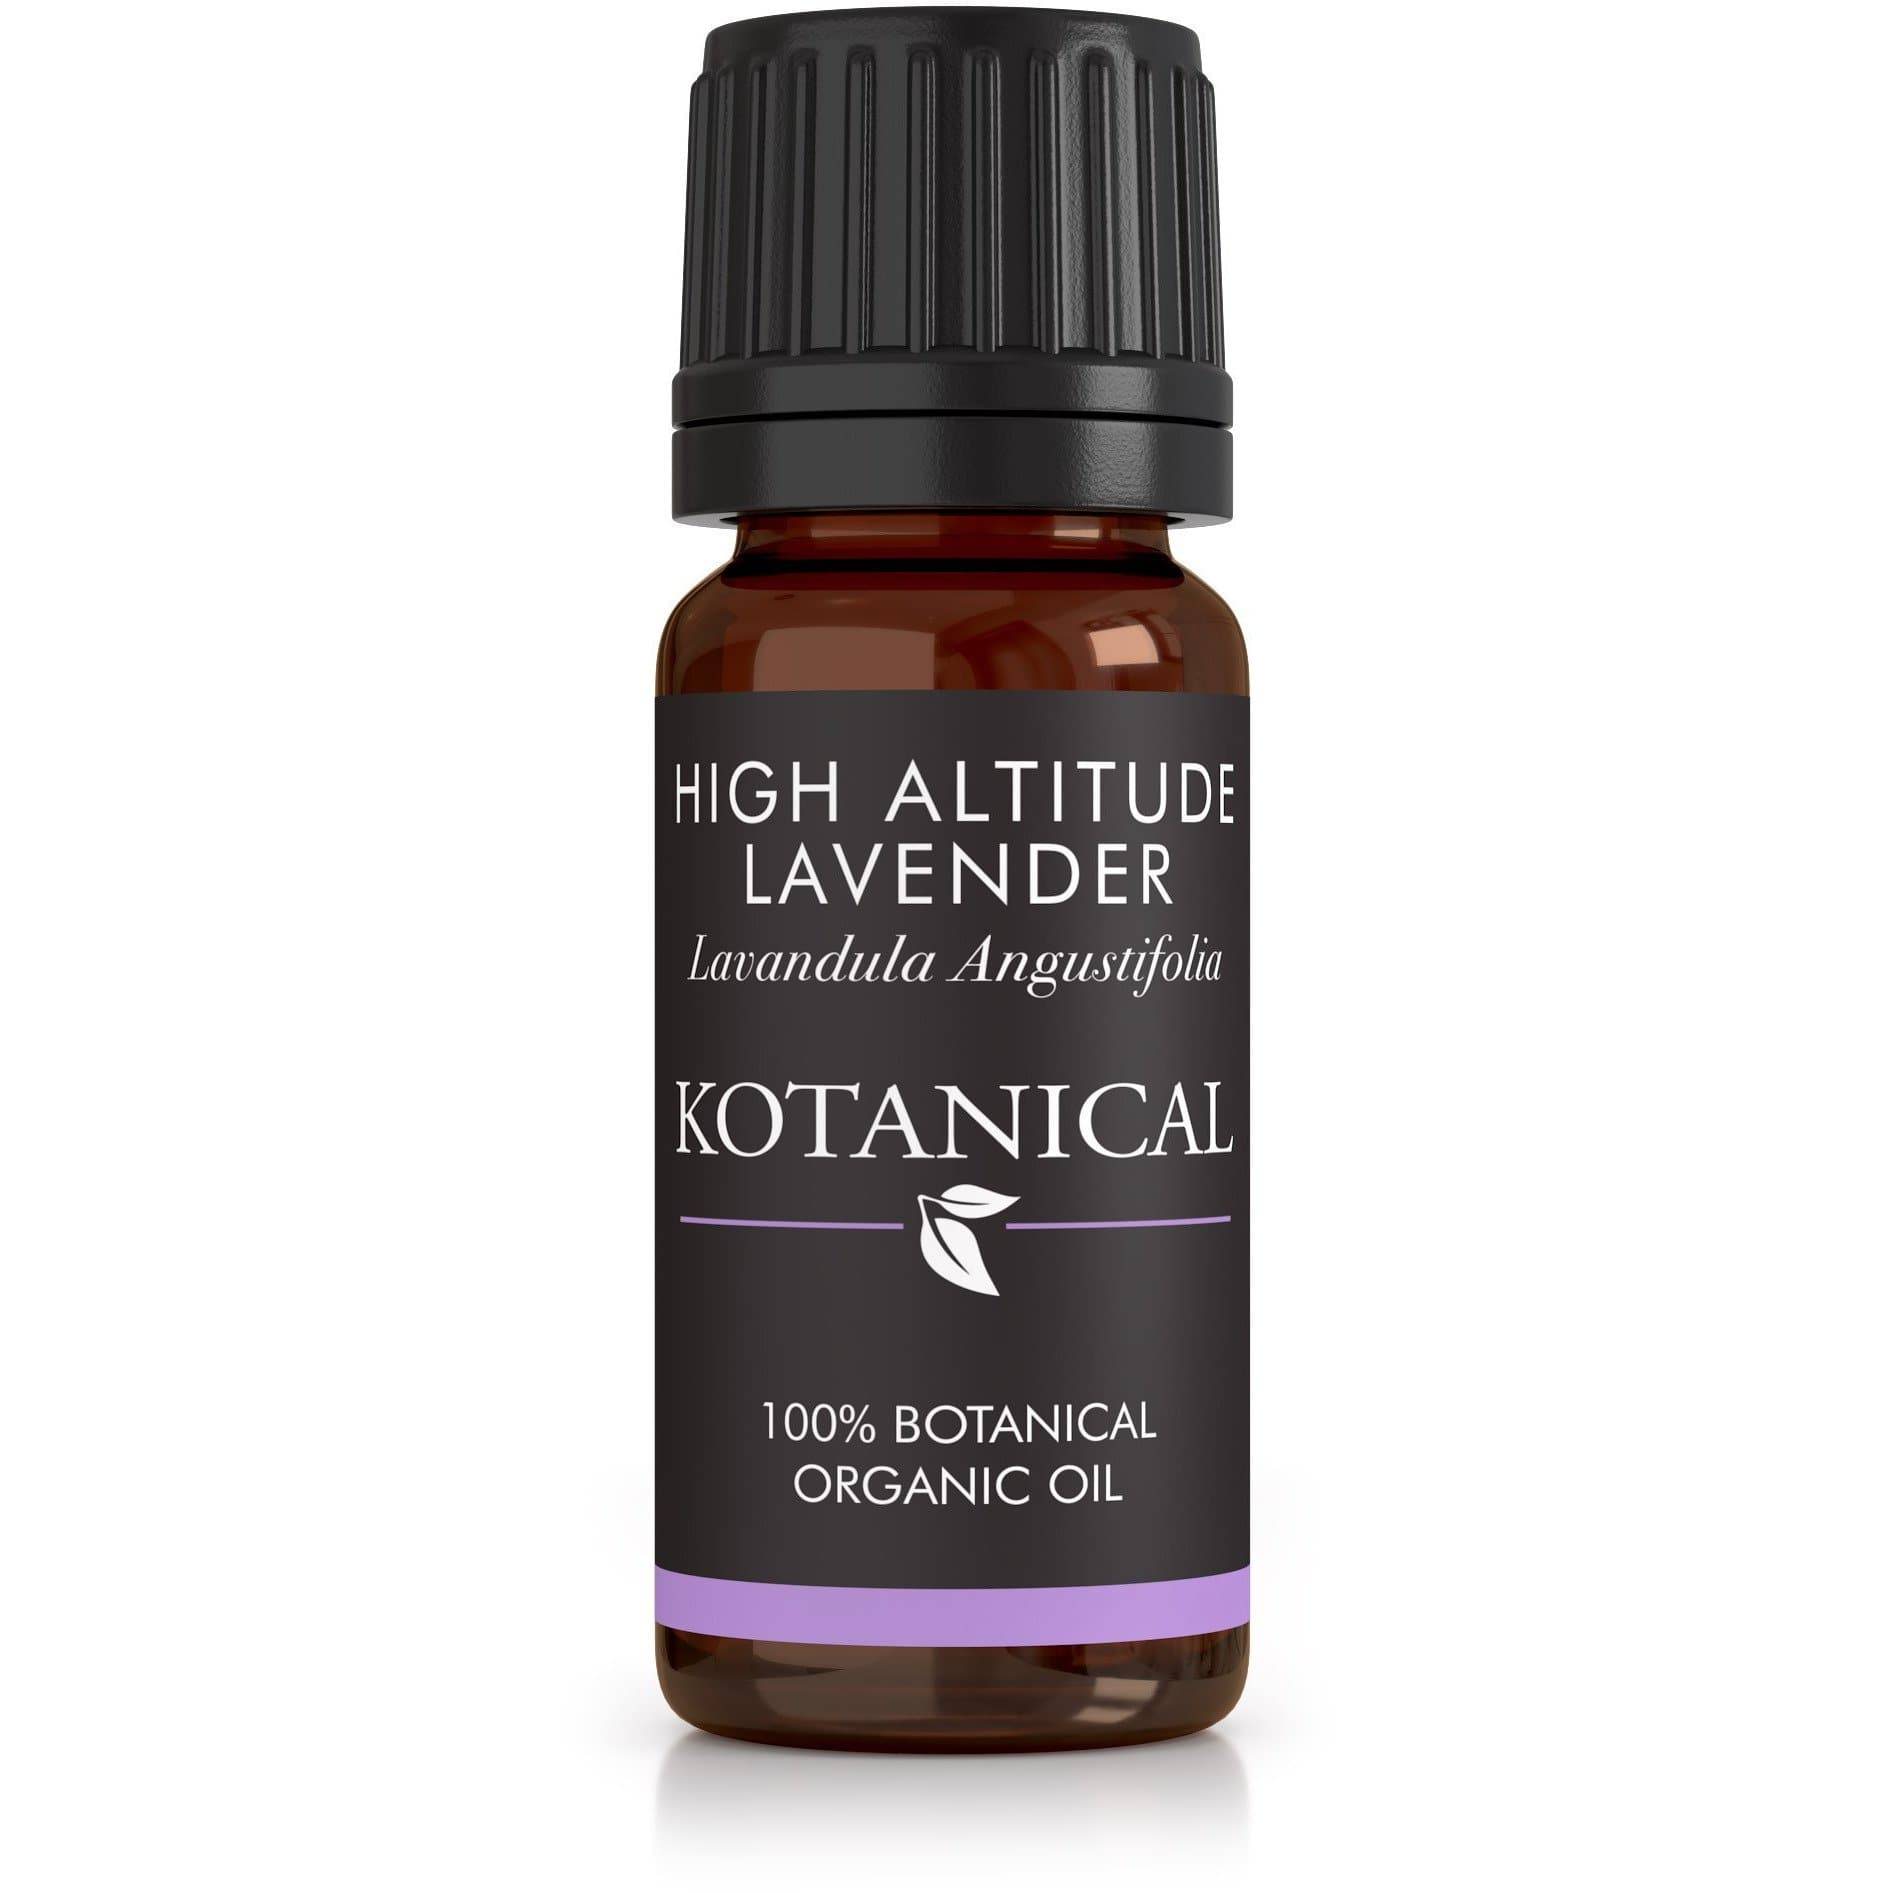 High Altitude Lavender Oil